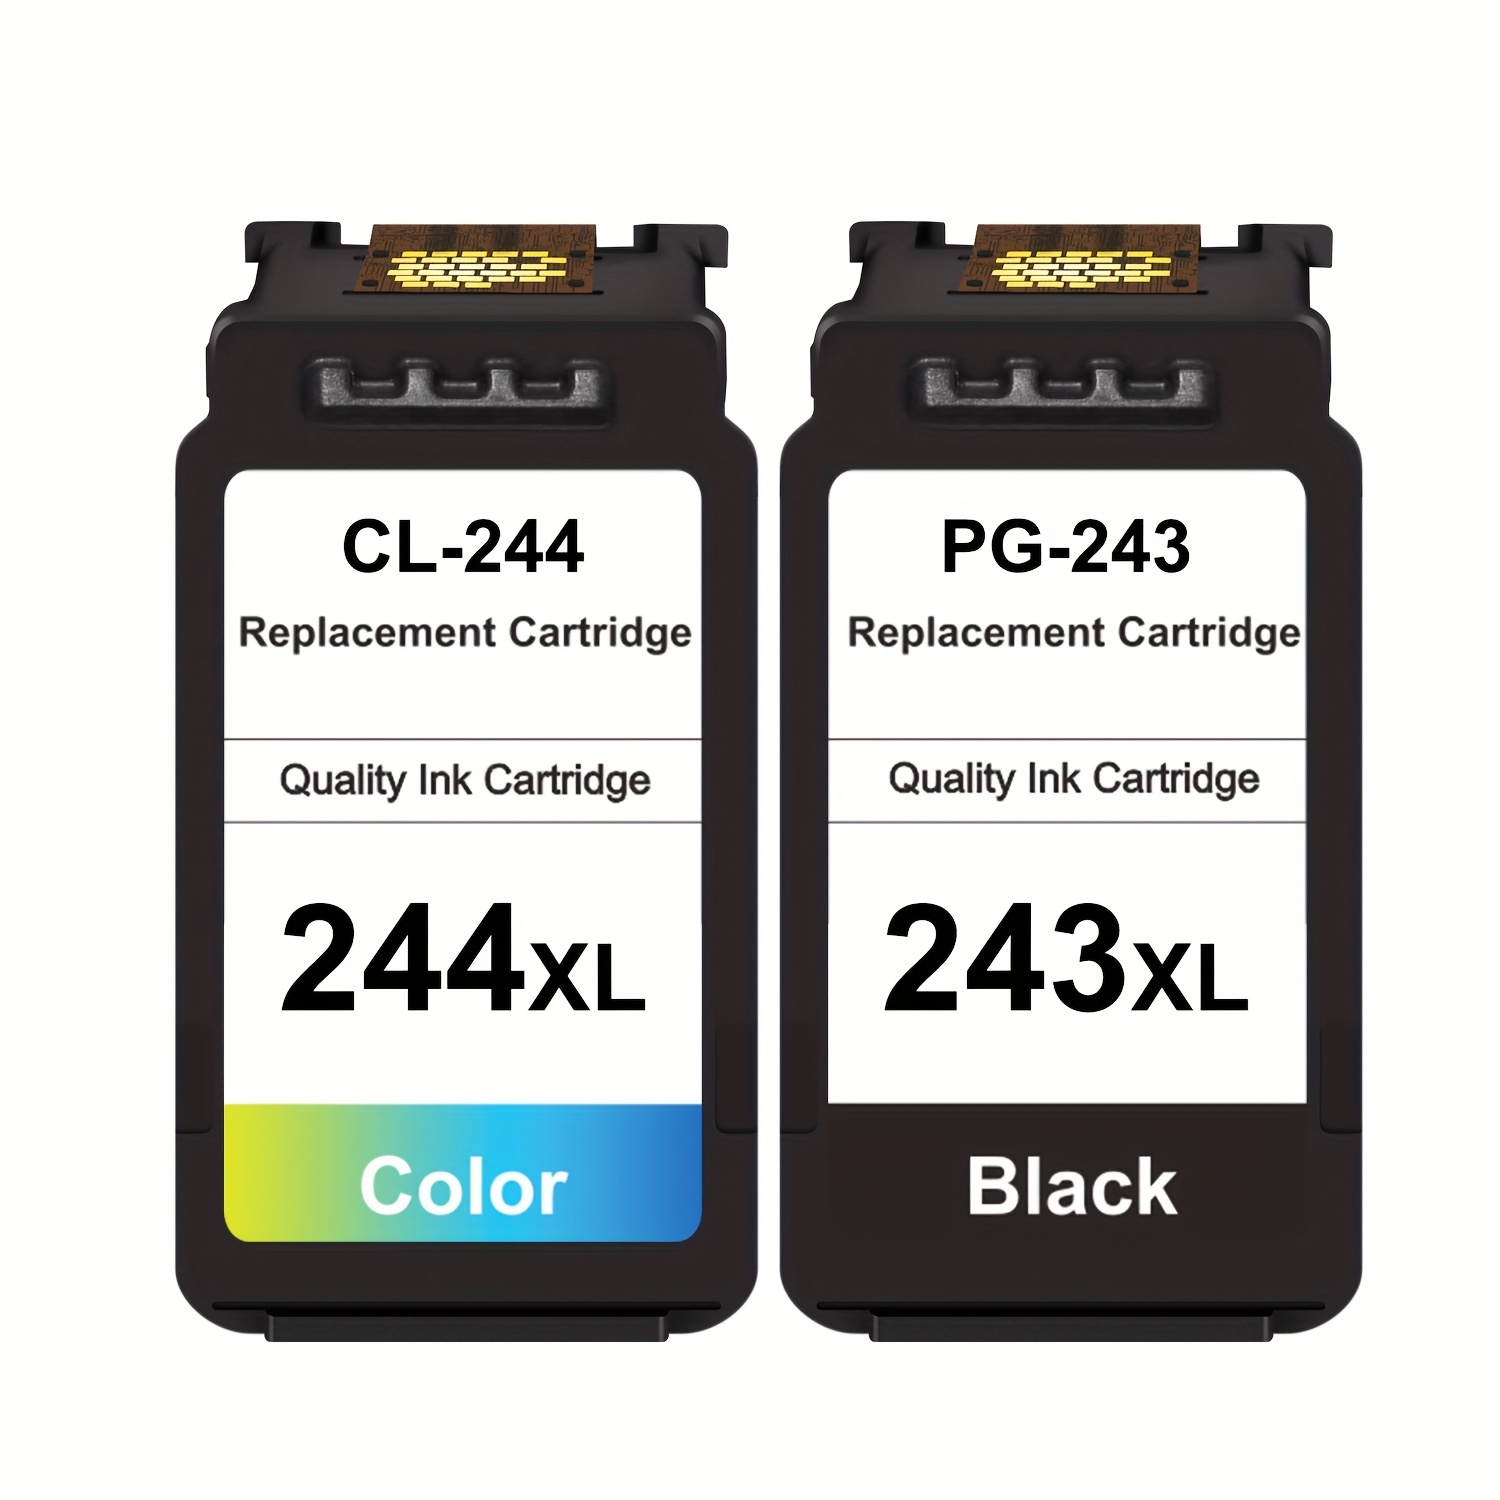 Original Canon Ink Cartridge PGI-580 Black for Pixma TS6150 TS8120